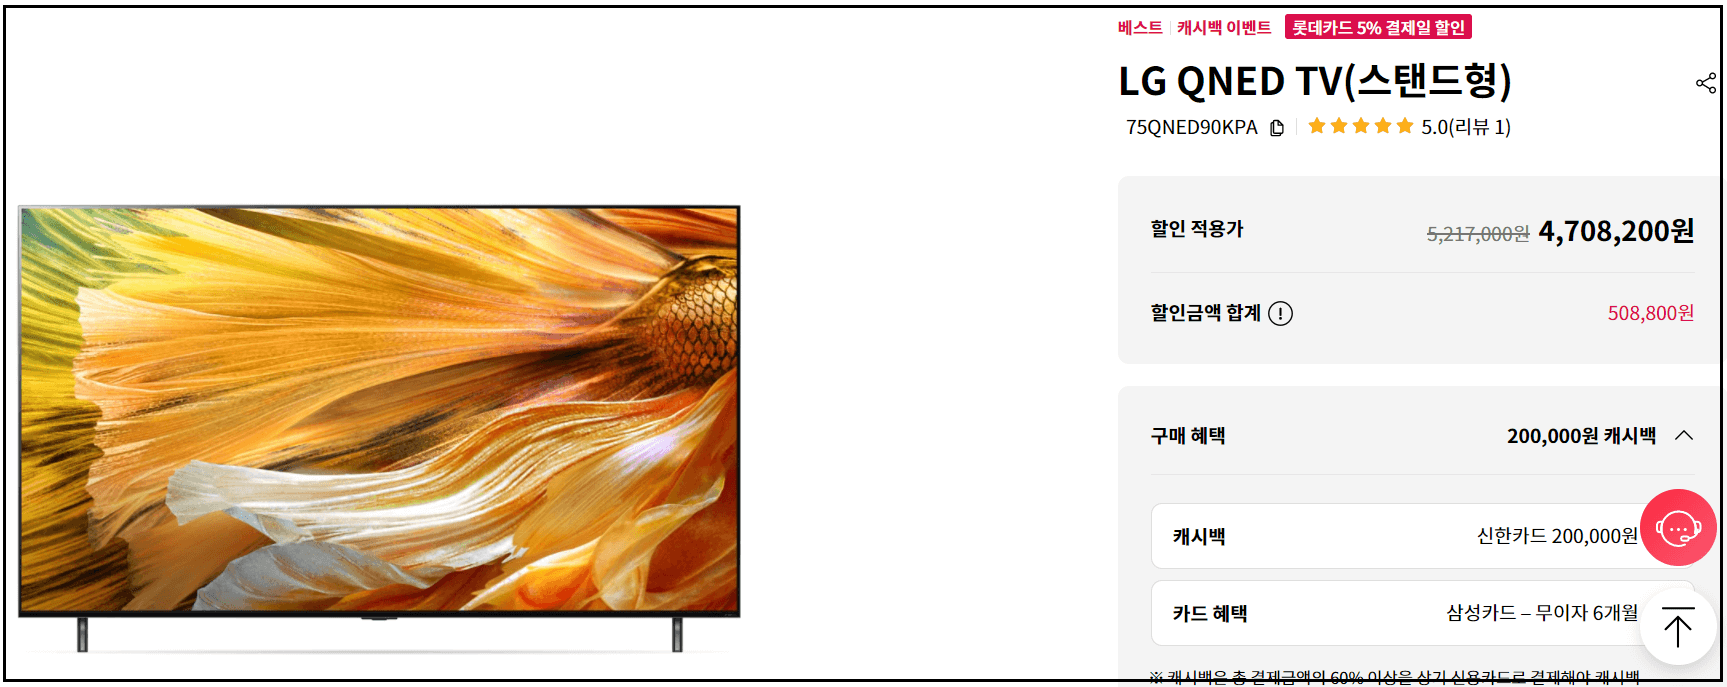 LG QNED TV 사진